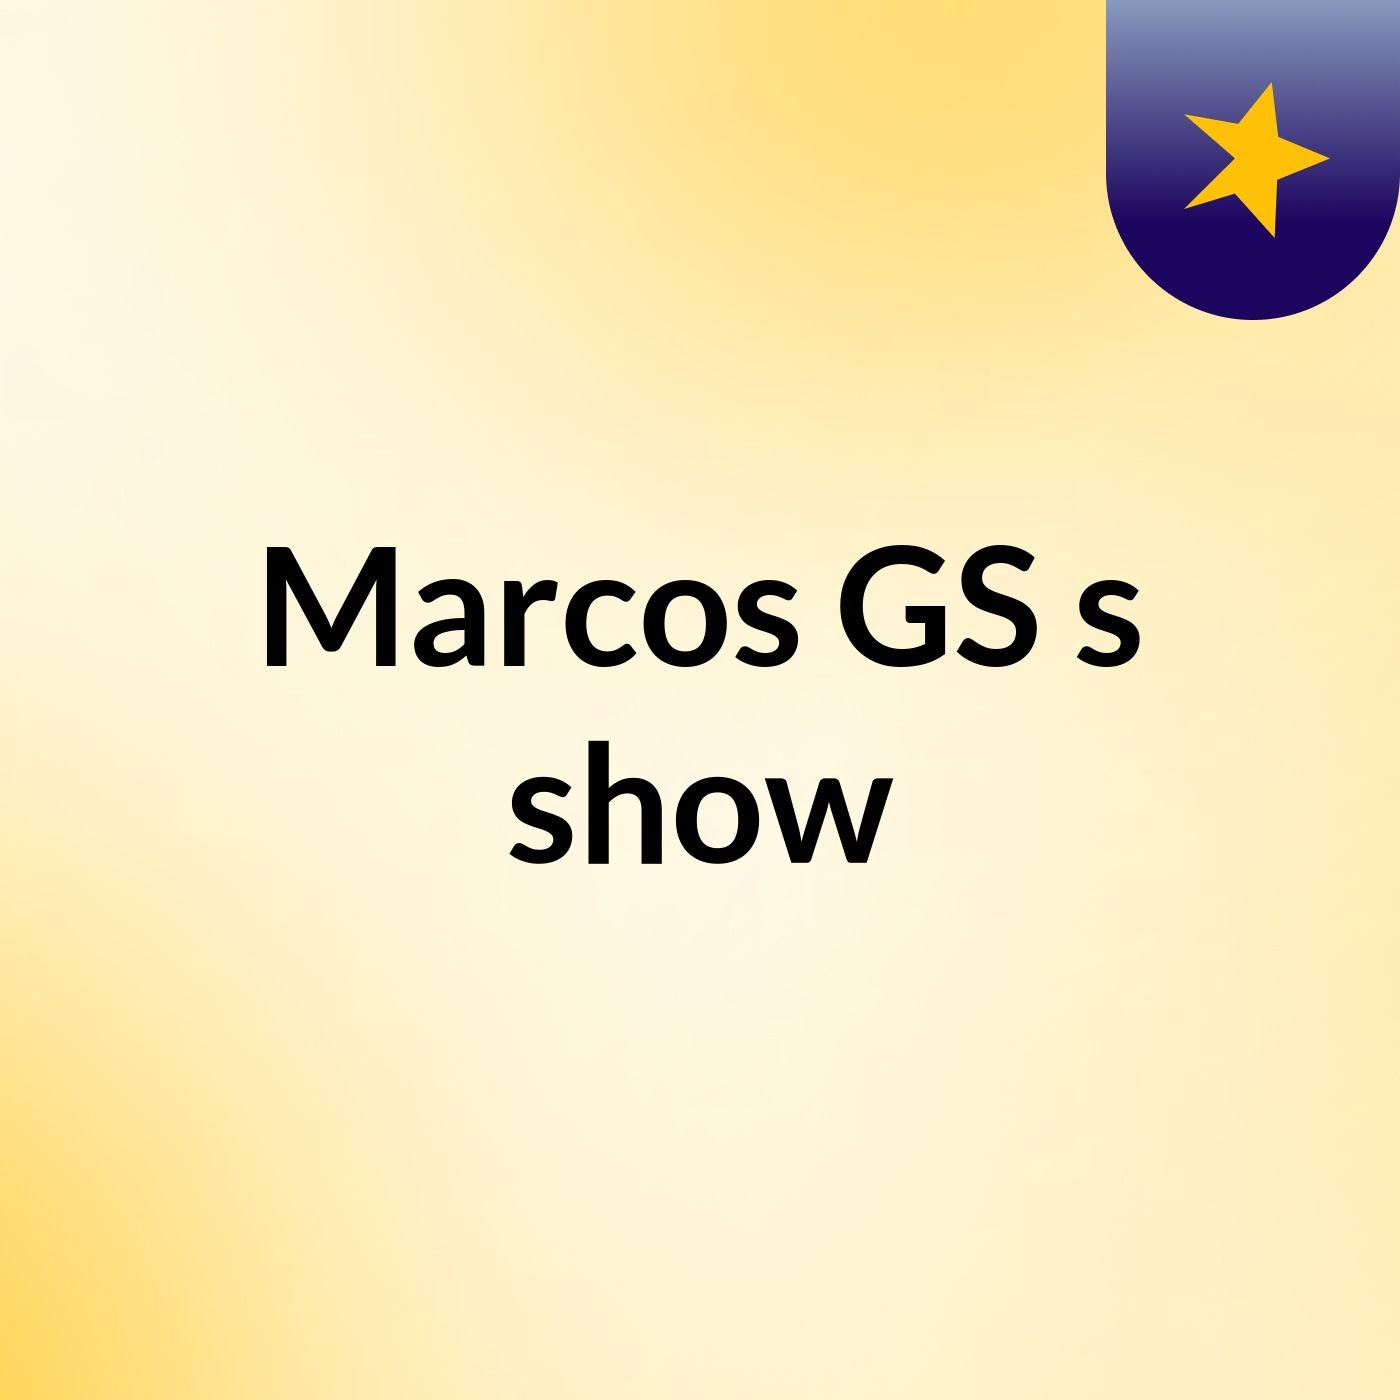 Marcos GS's show